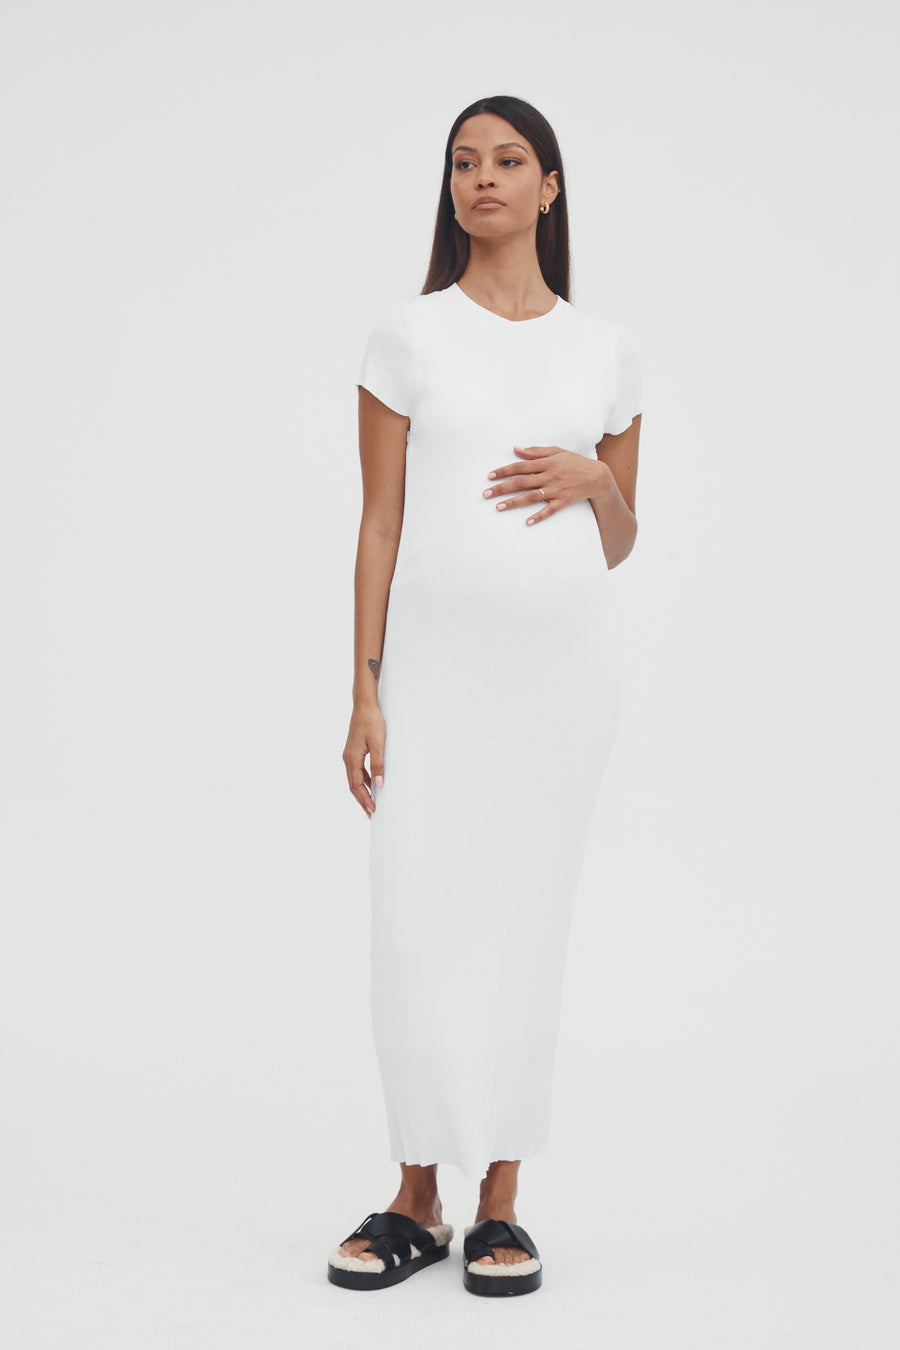 Stylish Babyshower Dress (White) 5